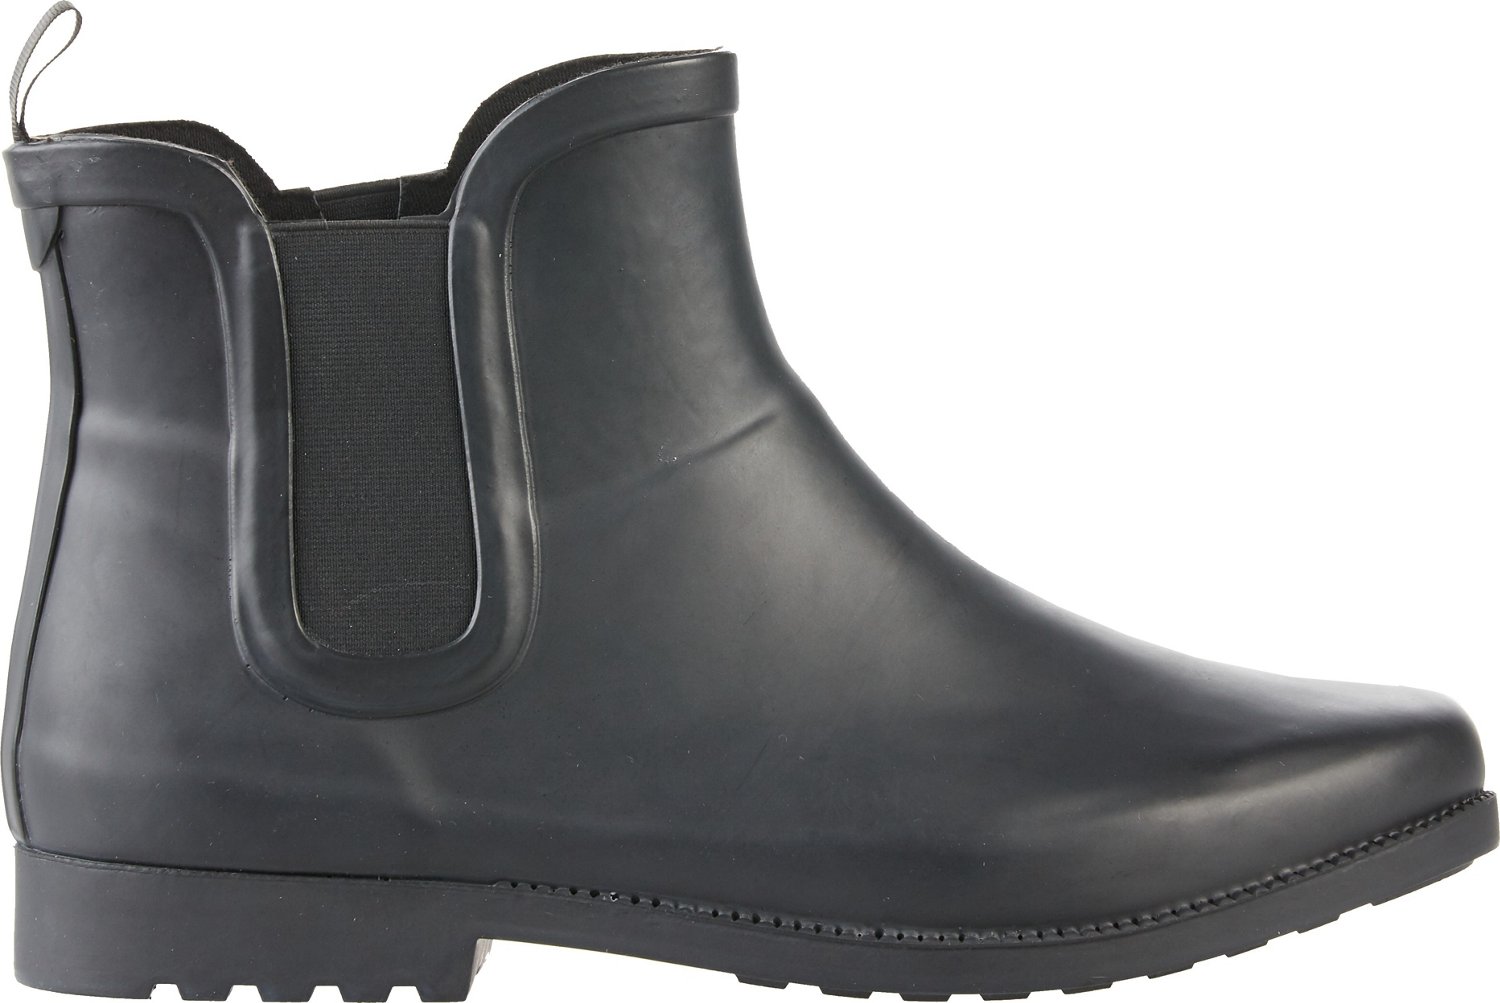 Magellan Outdoors Women's Chelsea Rubber Rain Boots | Academy